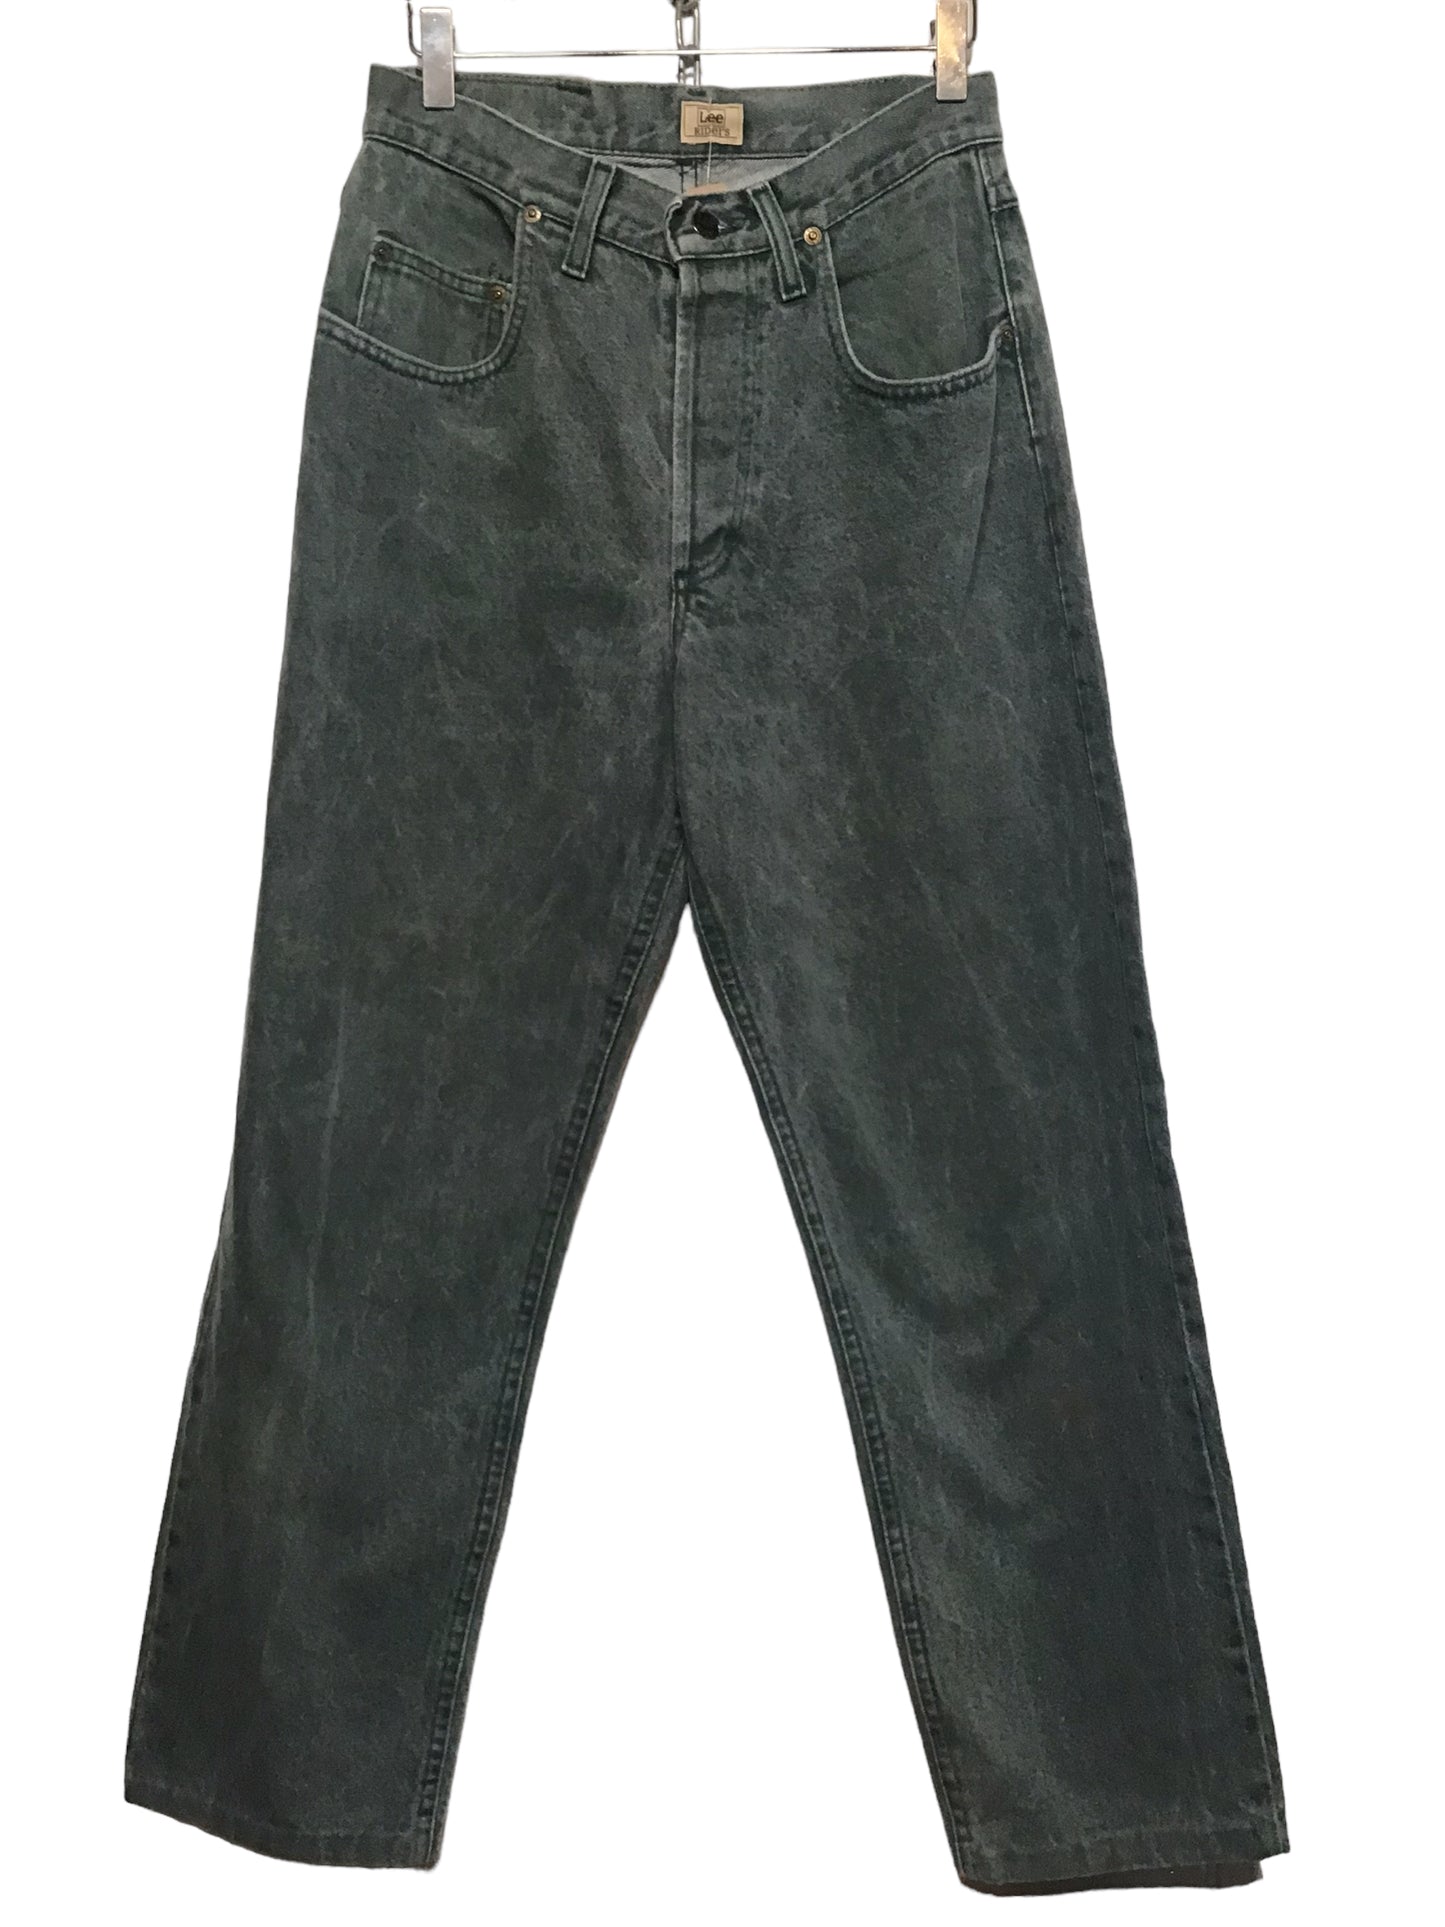 Lee Jeans (28x29)